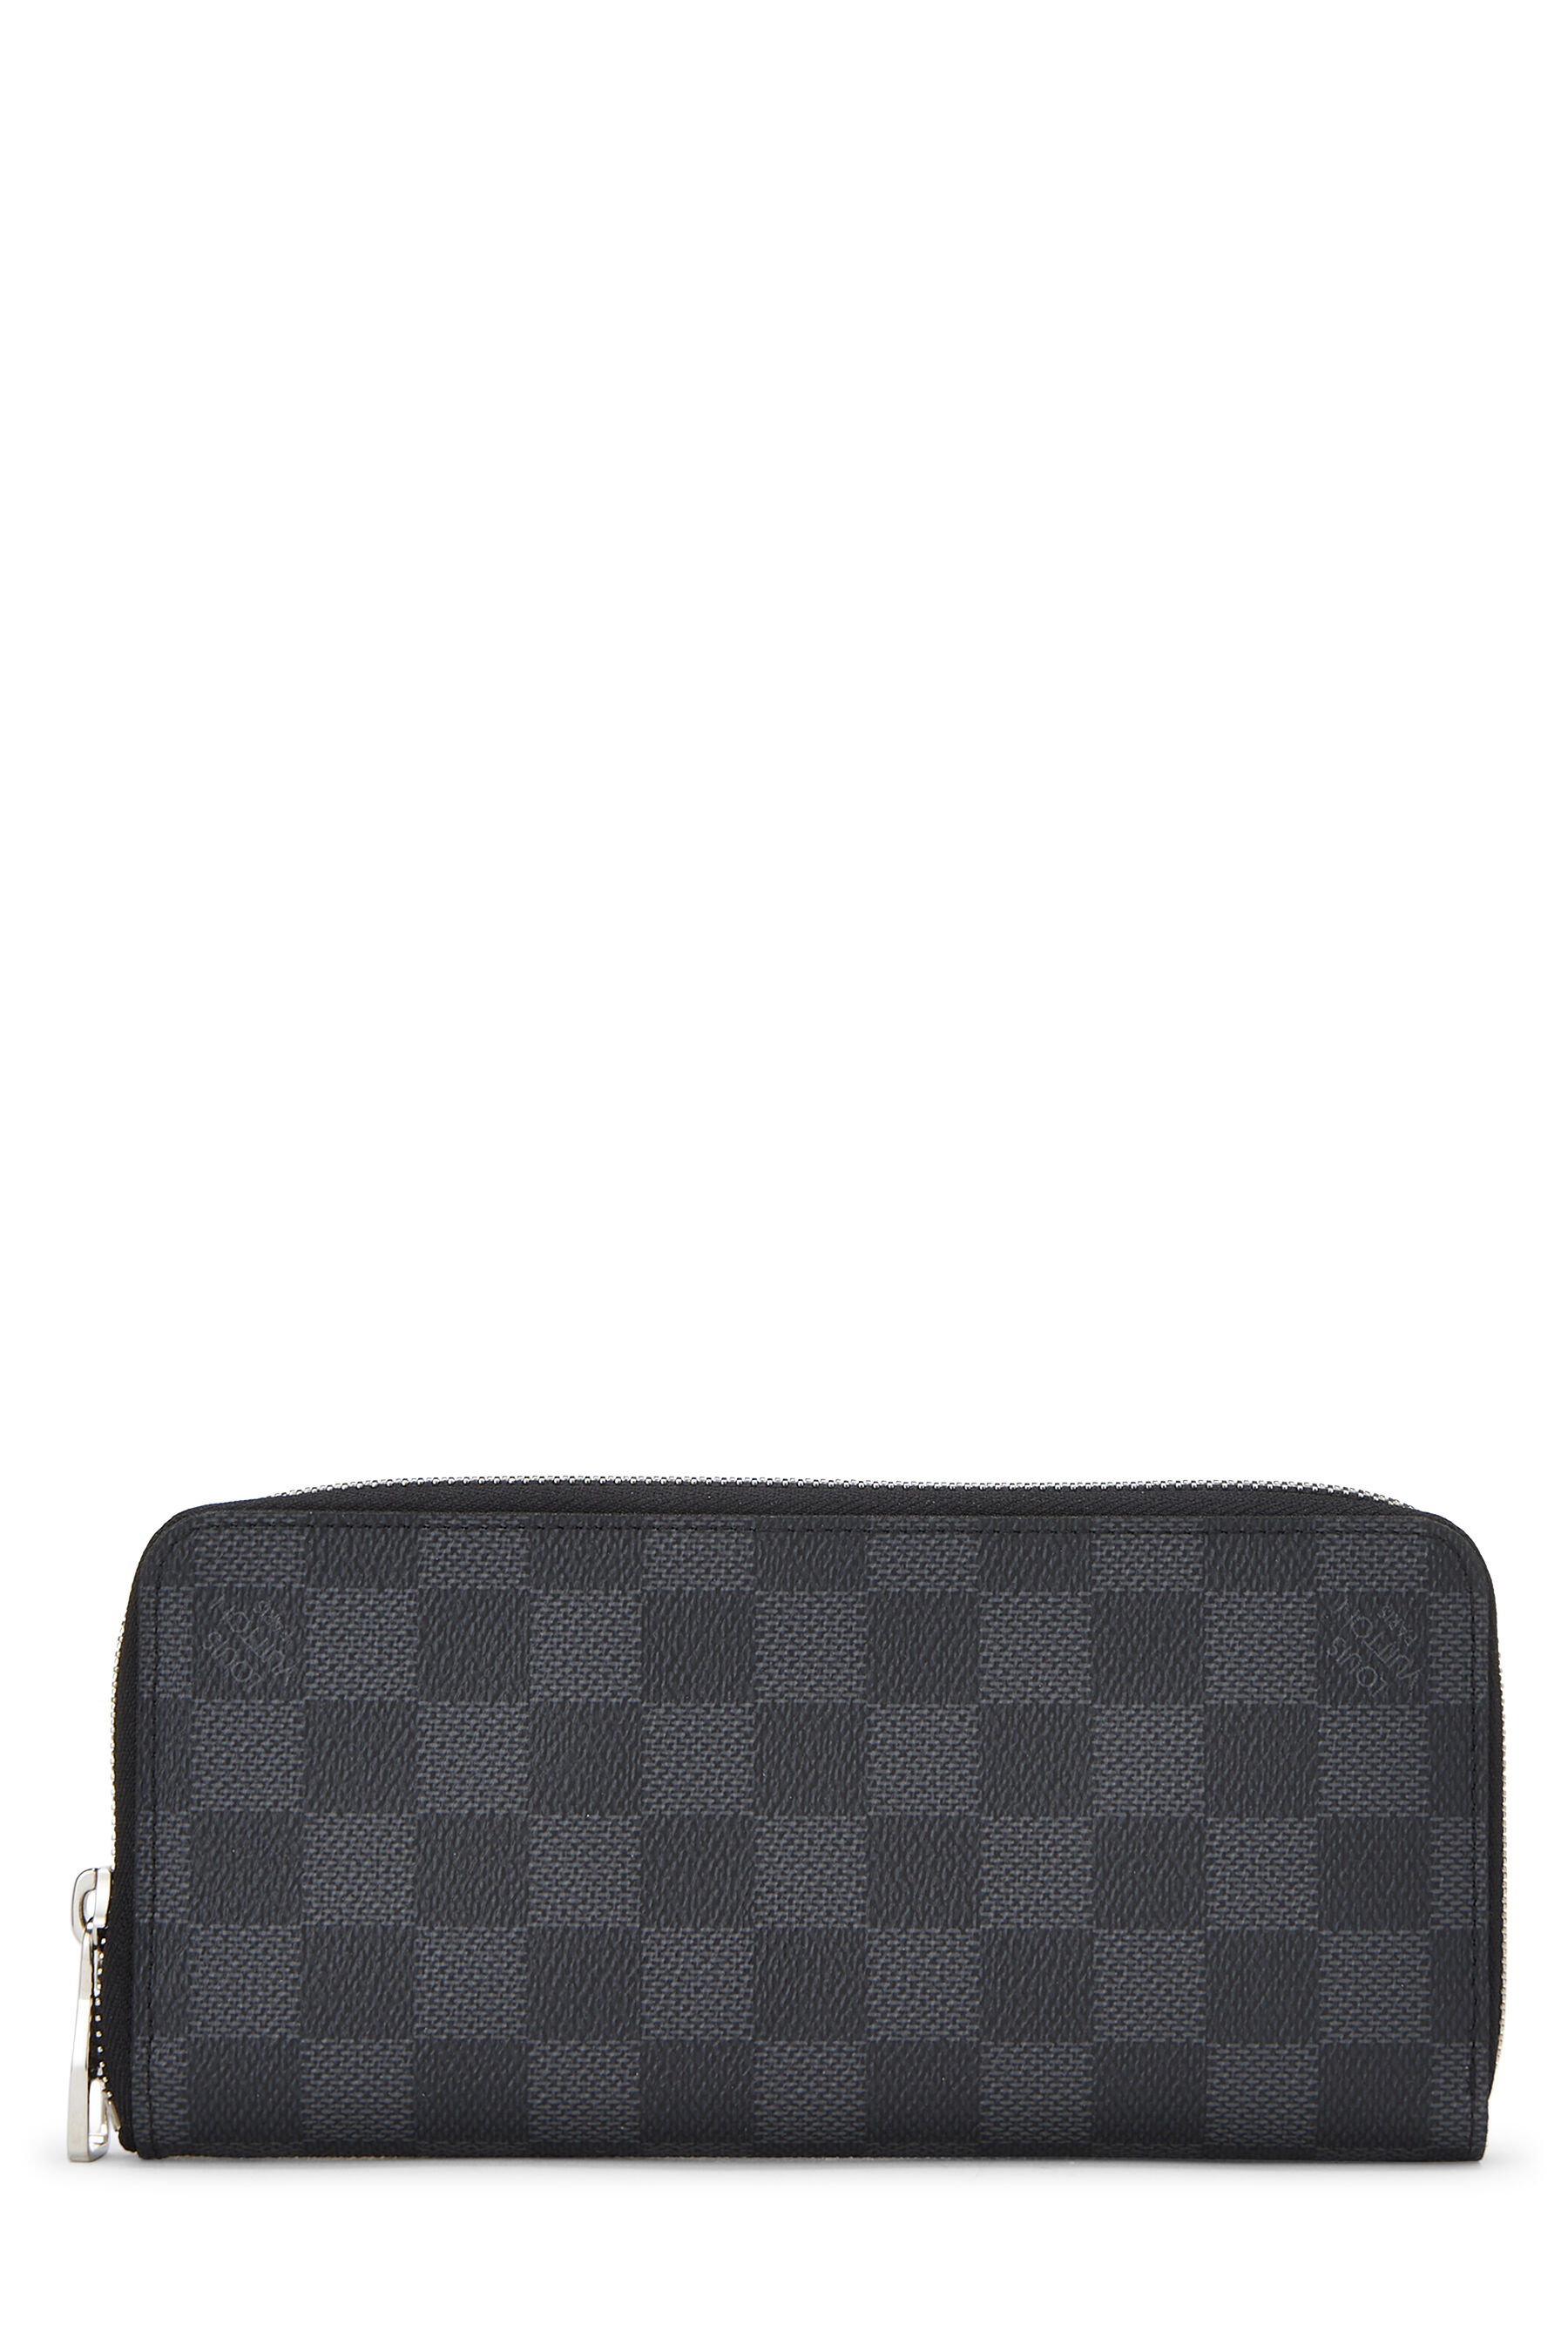 Louis Vuitton Zippy Wallet Damier Graphite Vertical Black